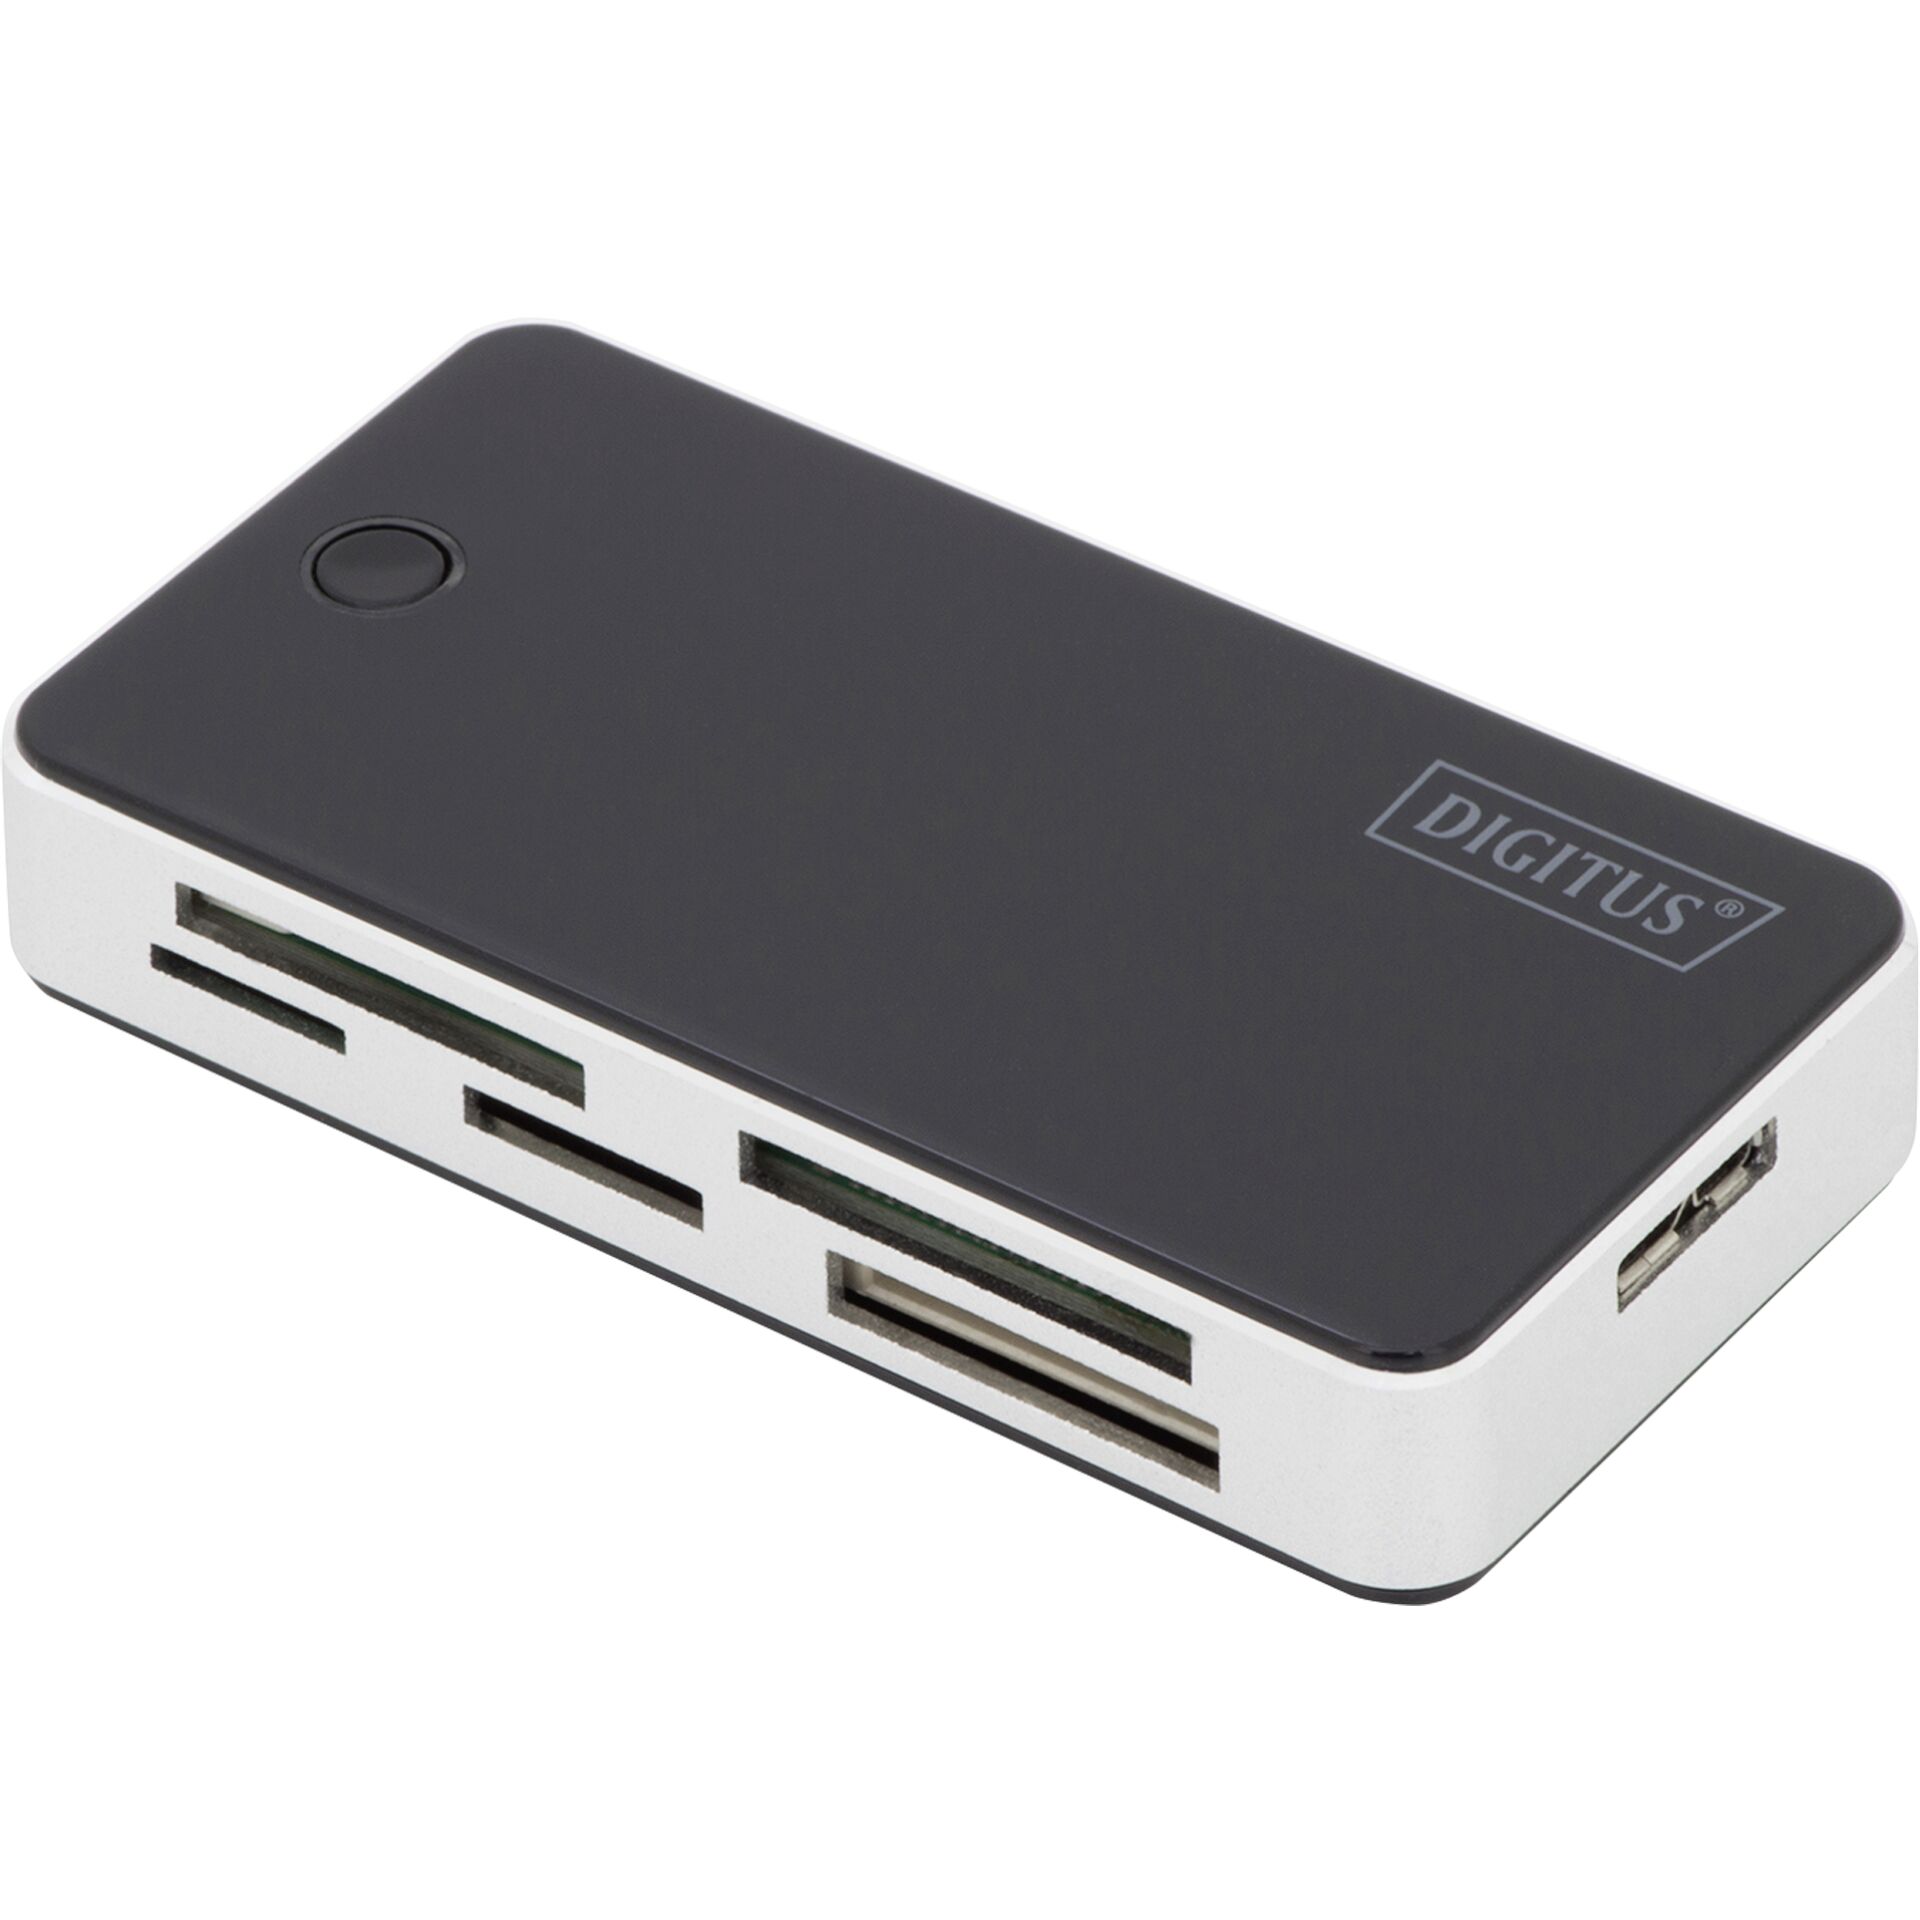 Digitus All-in-one Multi-Slot-Cardreader, USB 3.0 Micro-B [Buchse]